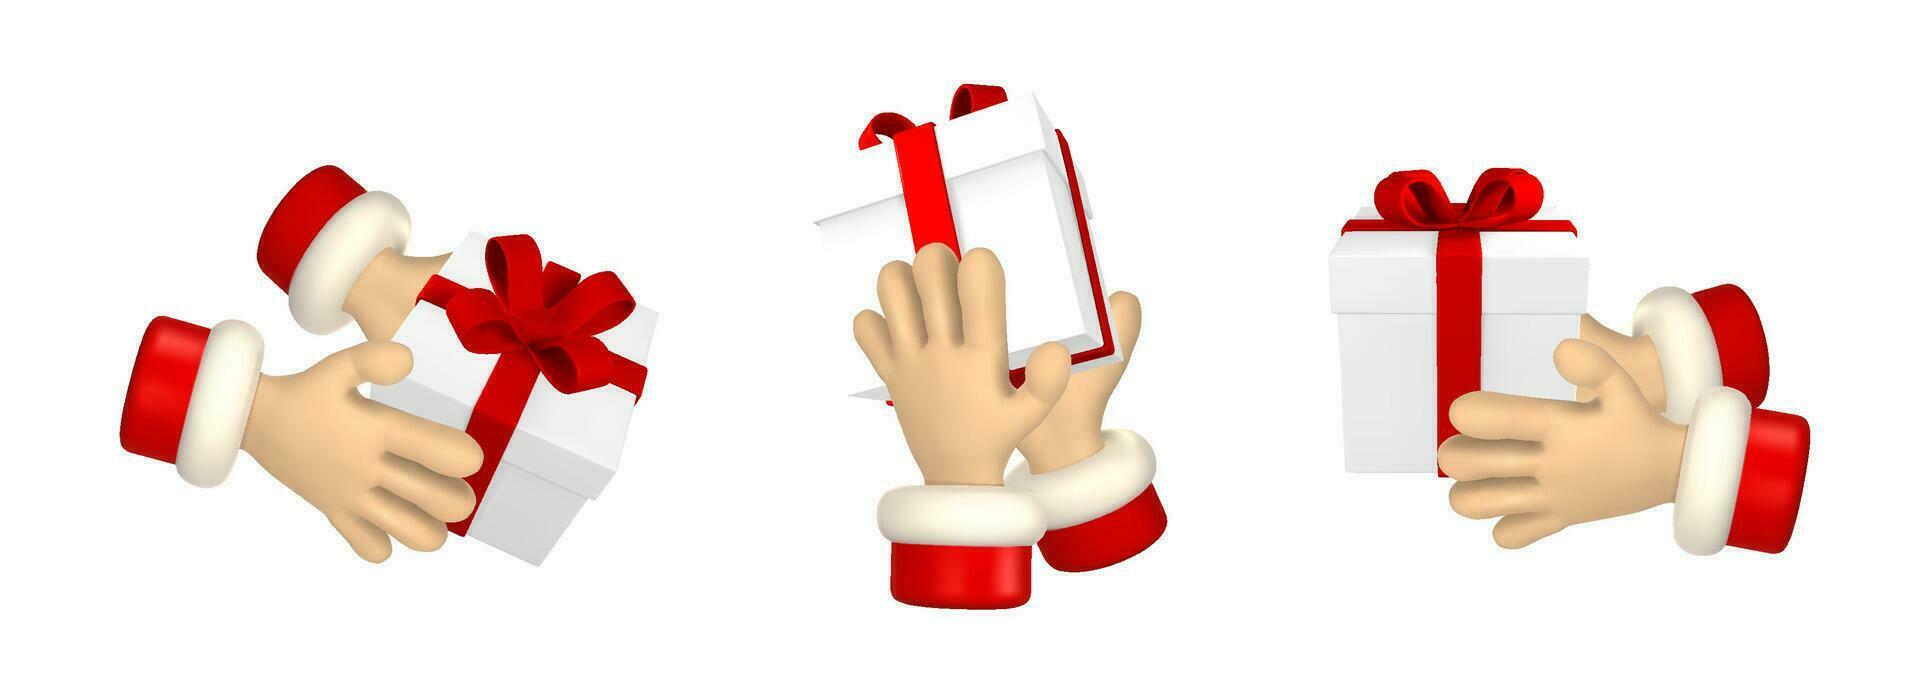 Cartoon character hand with gift boxex. 3d render santa hands. Vector illustration